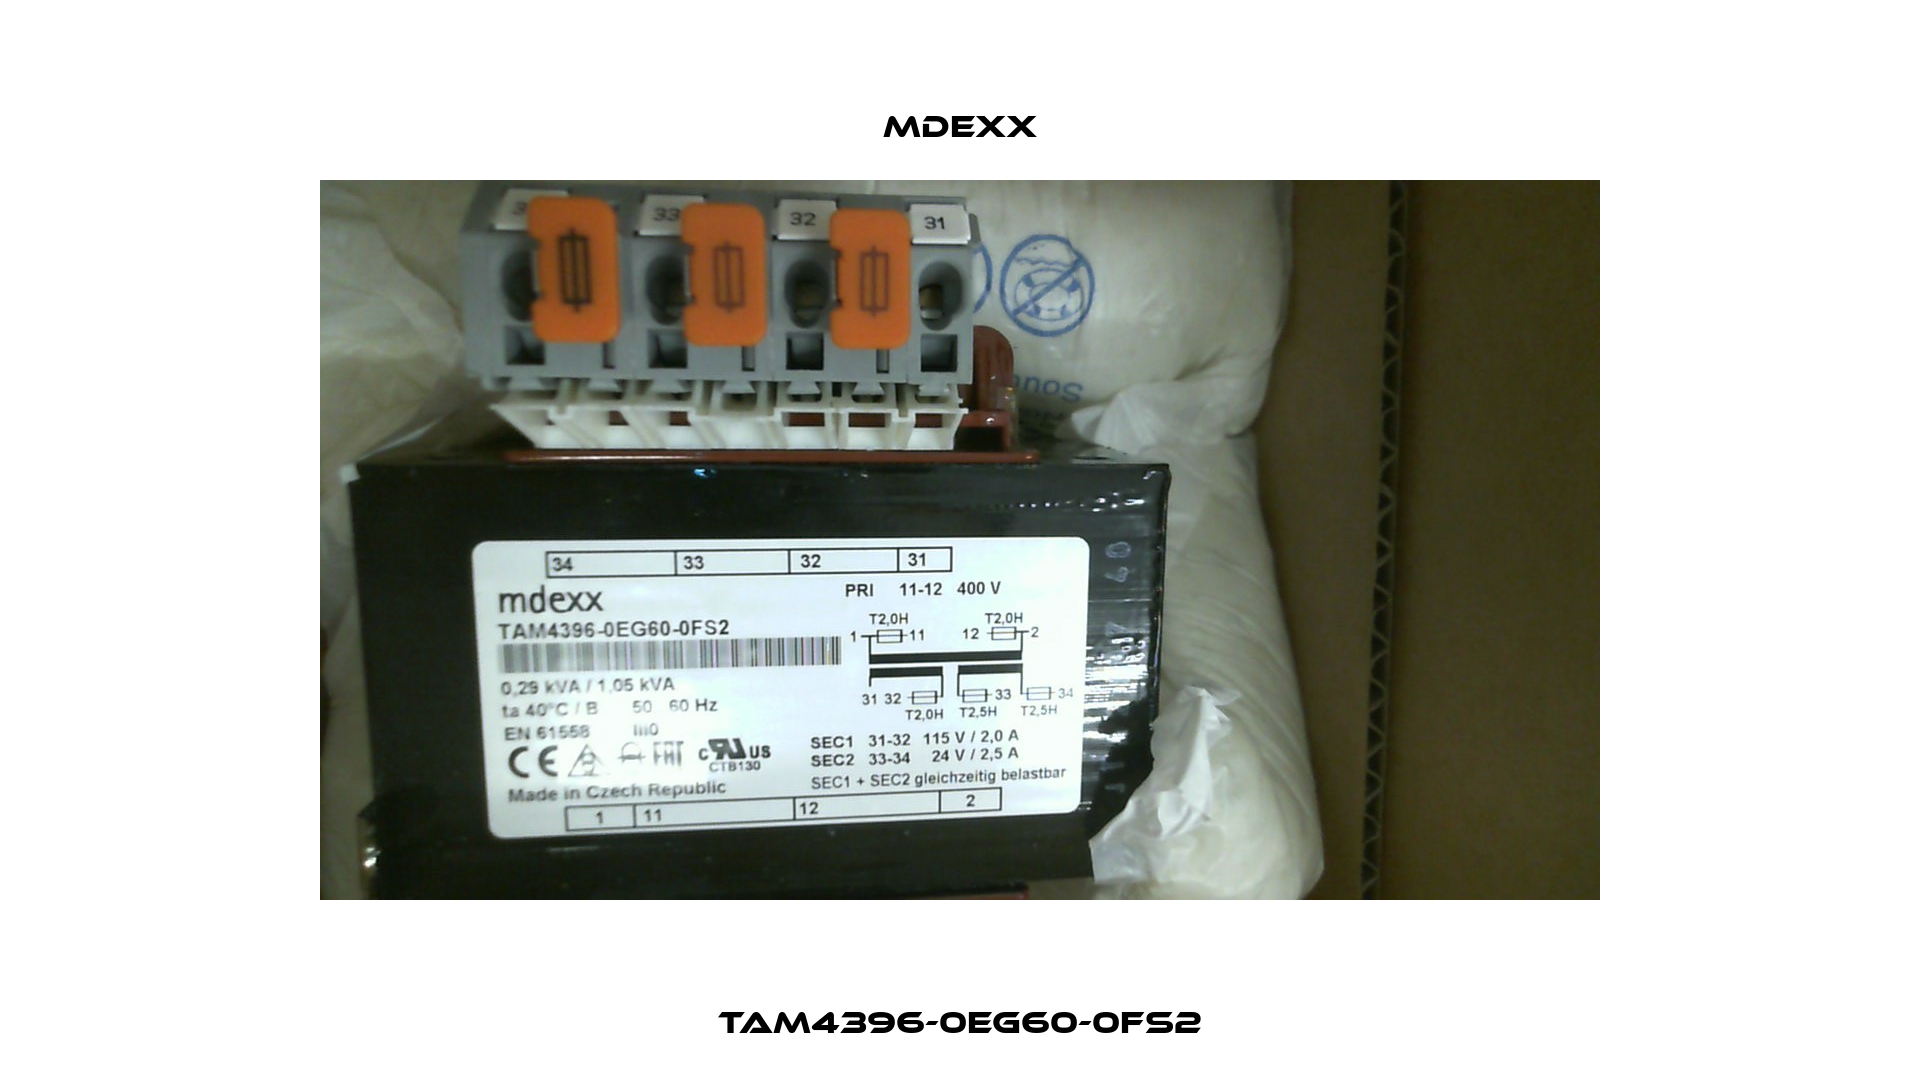 TAM4396-0EG60-0FS2 Mdexx